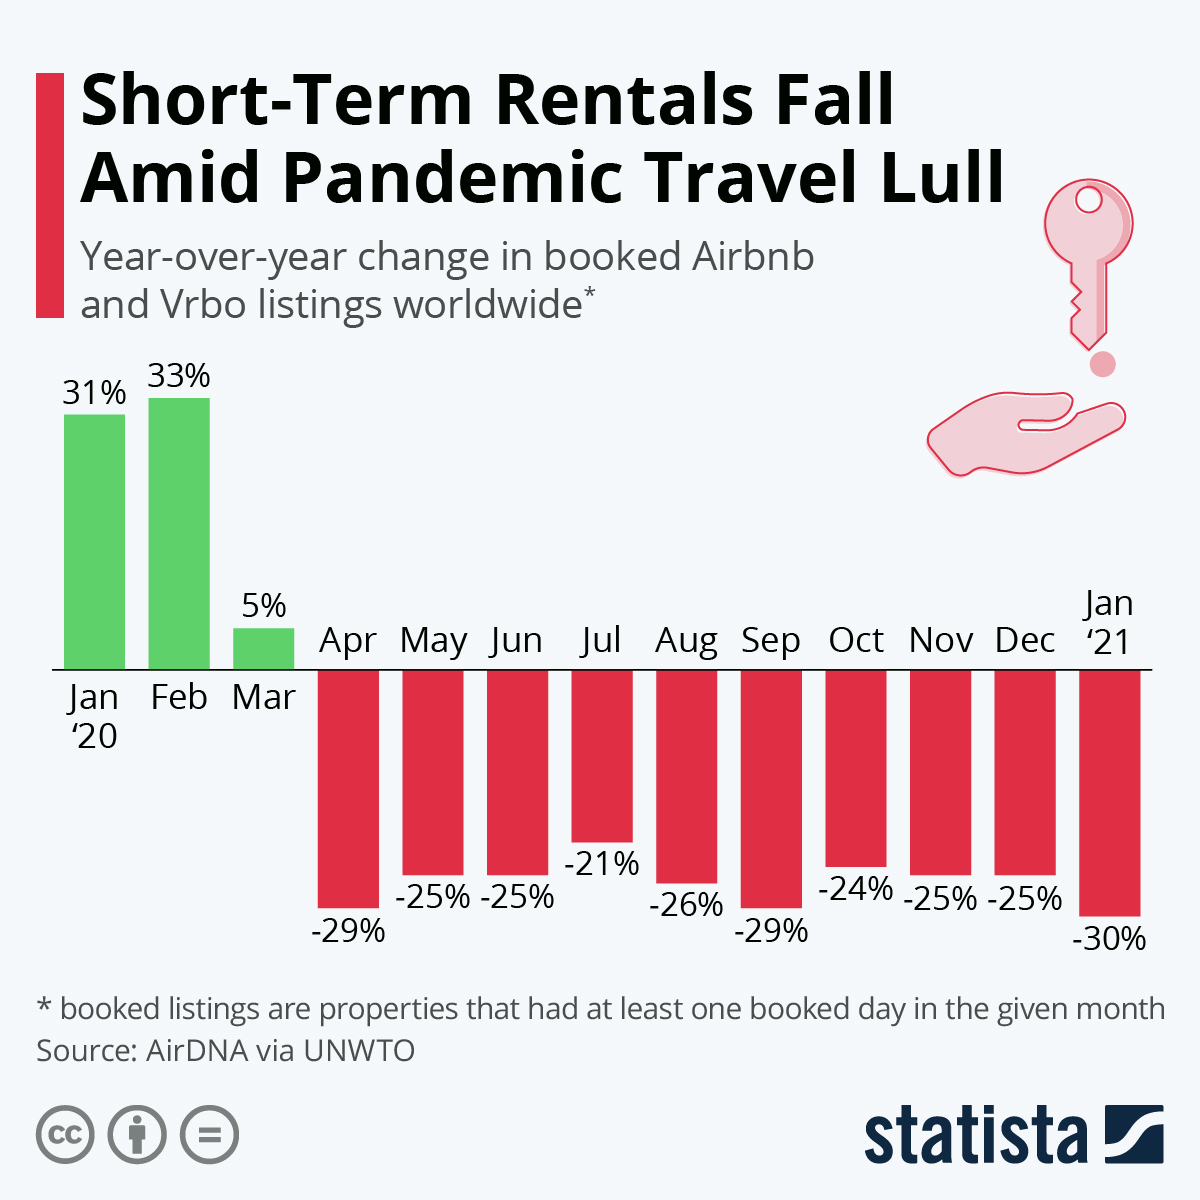 Short-Term Rentals Fall Amid Pandemic Travel Lull